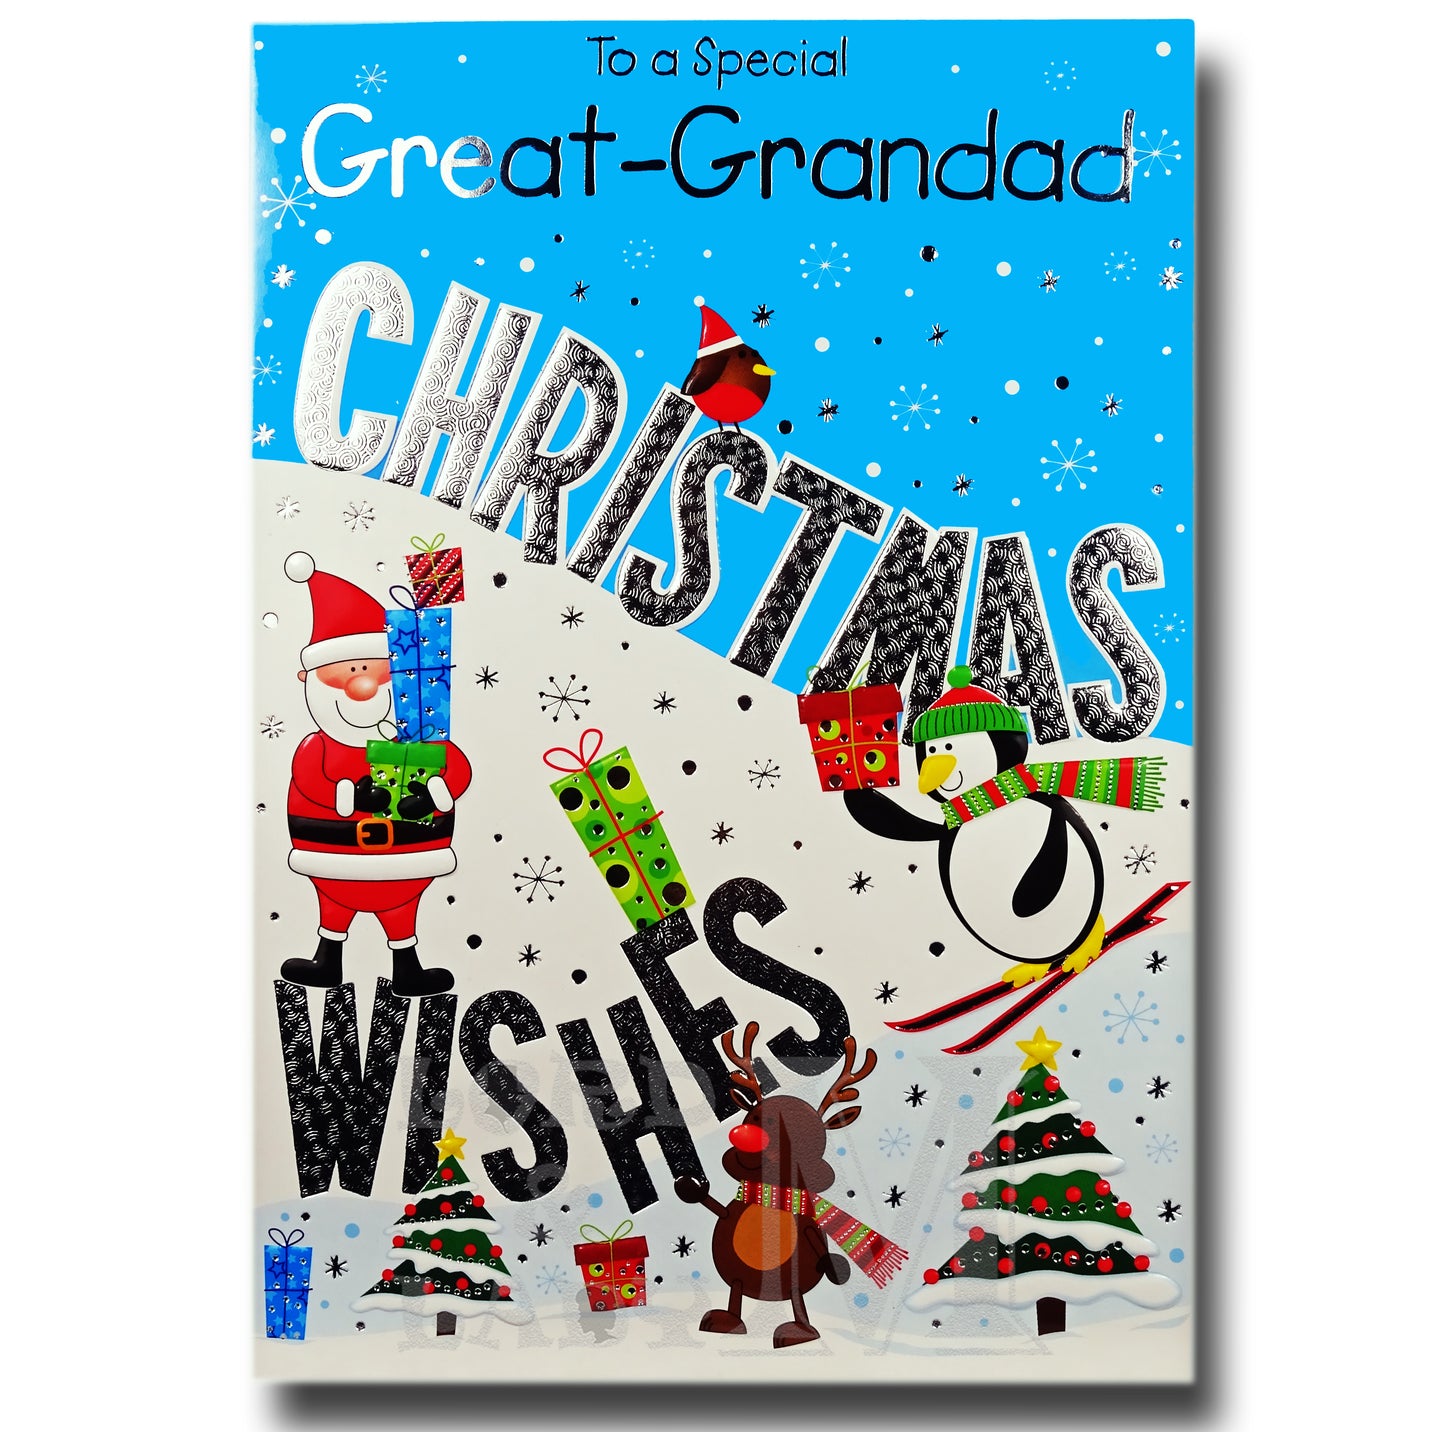 19cm - ... Great-Grandad Christmas Wishes - BGC